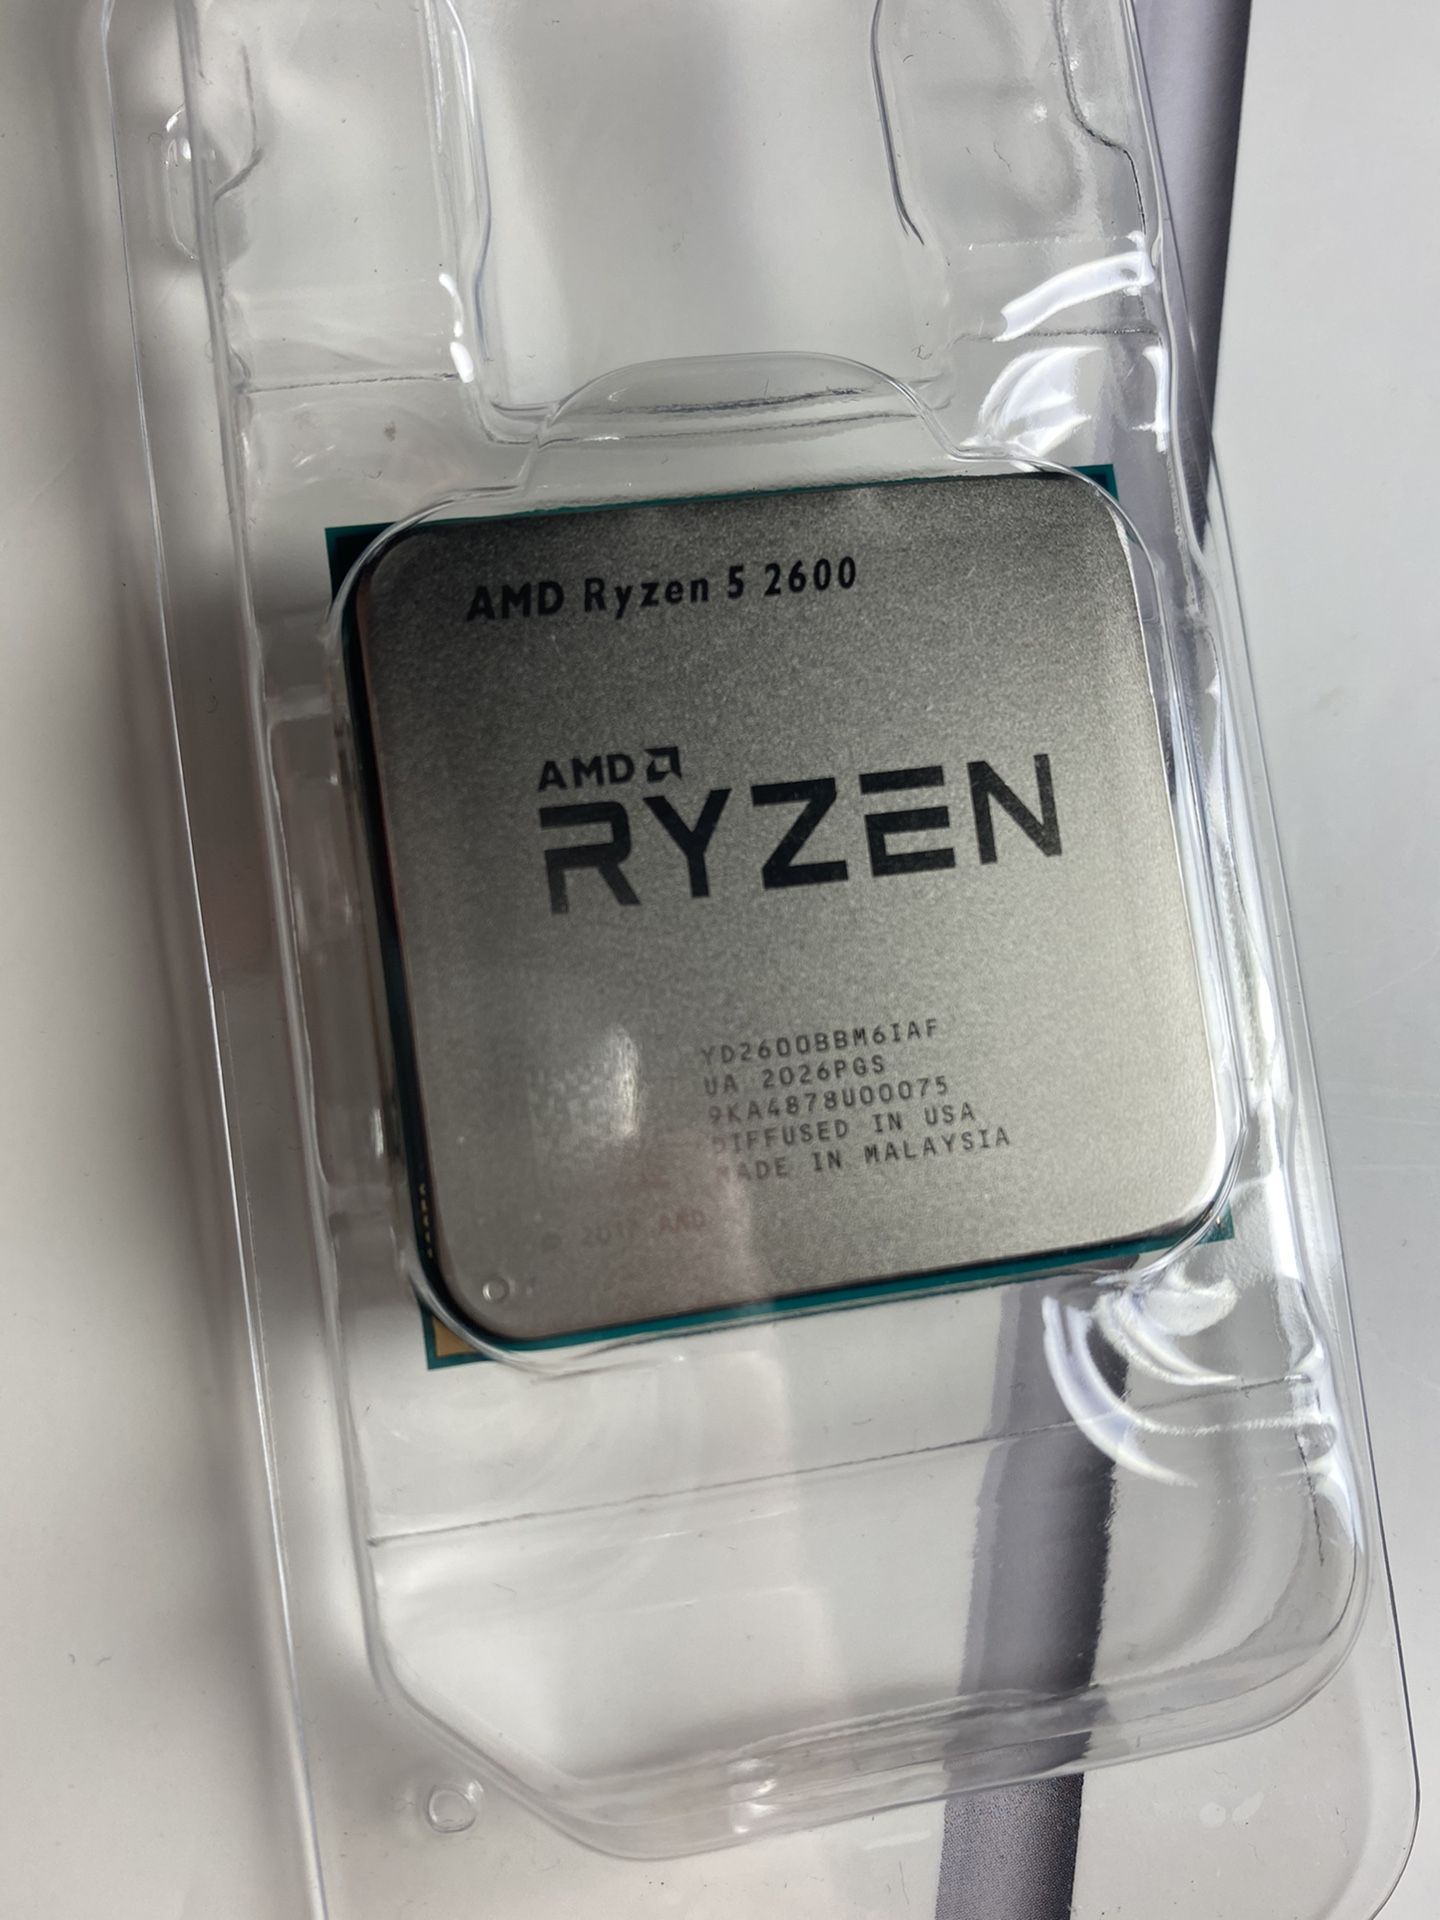 AMD Ryzen 5 2600, New never used